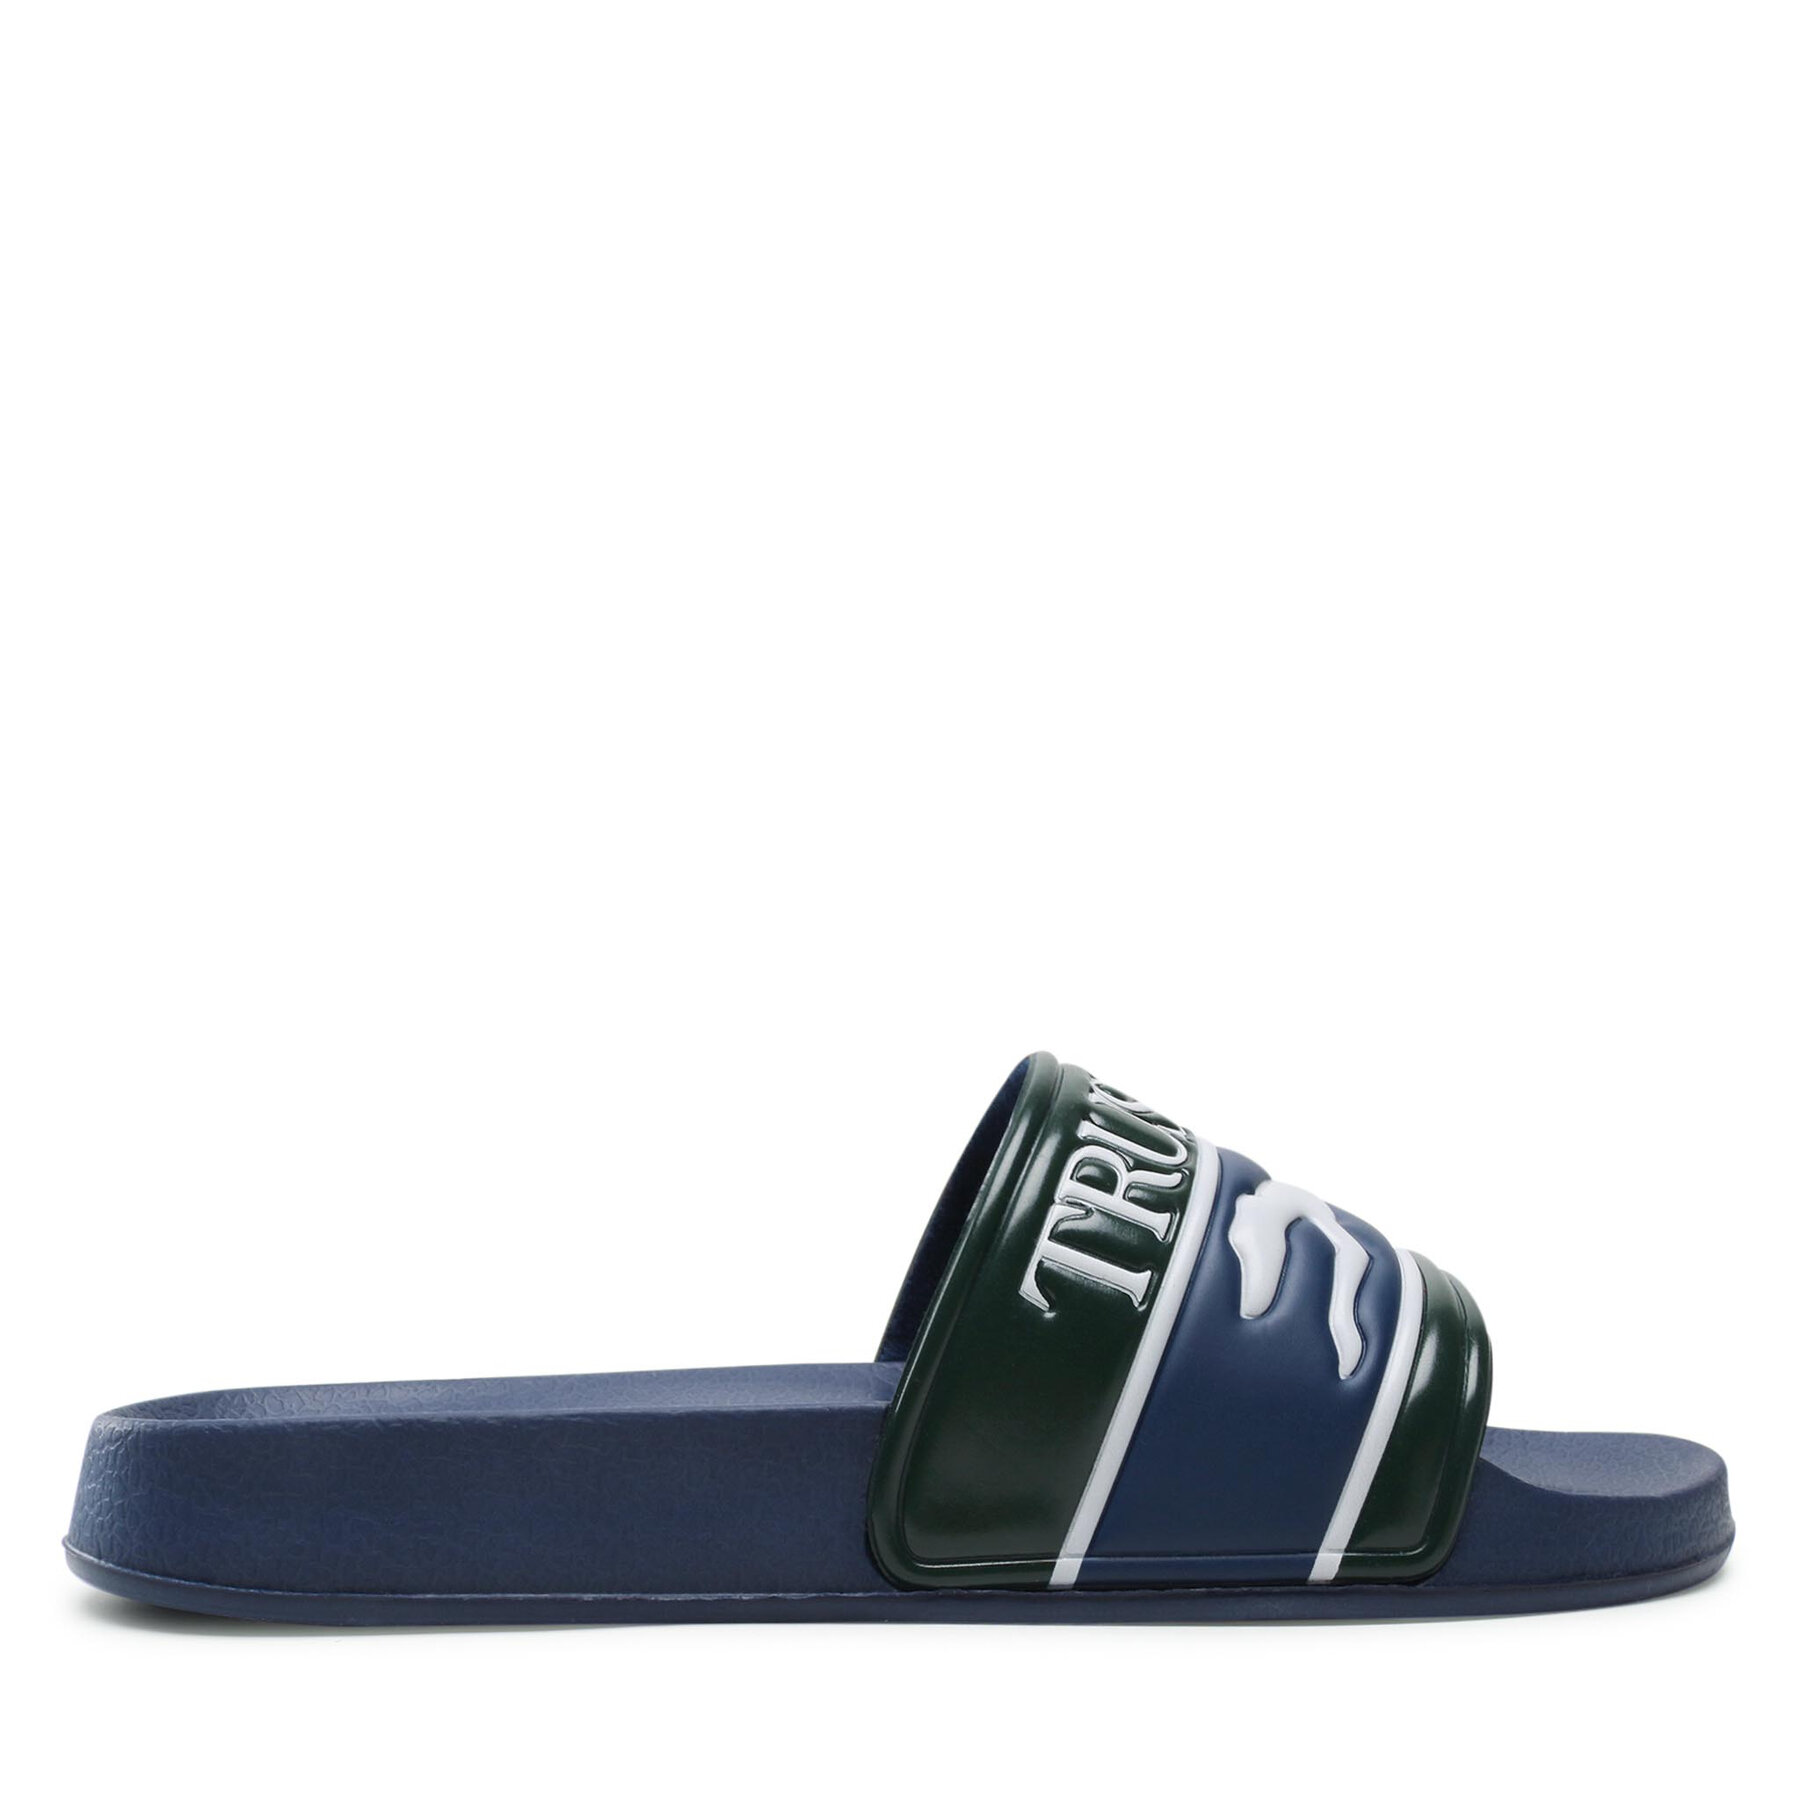 Comprar en oferta Trussardi Sandals blue